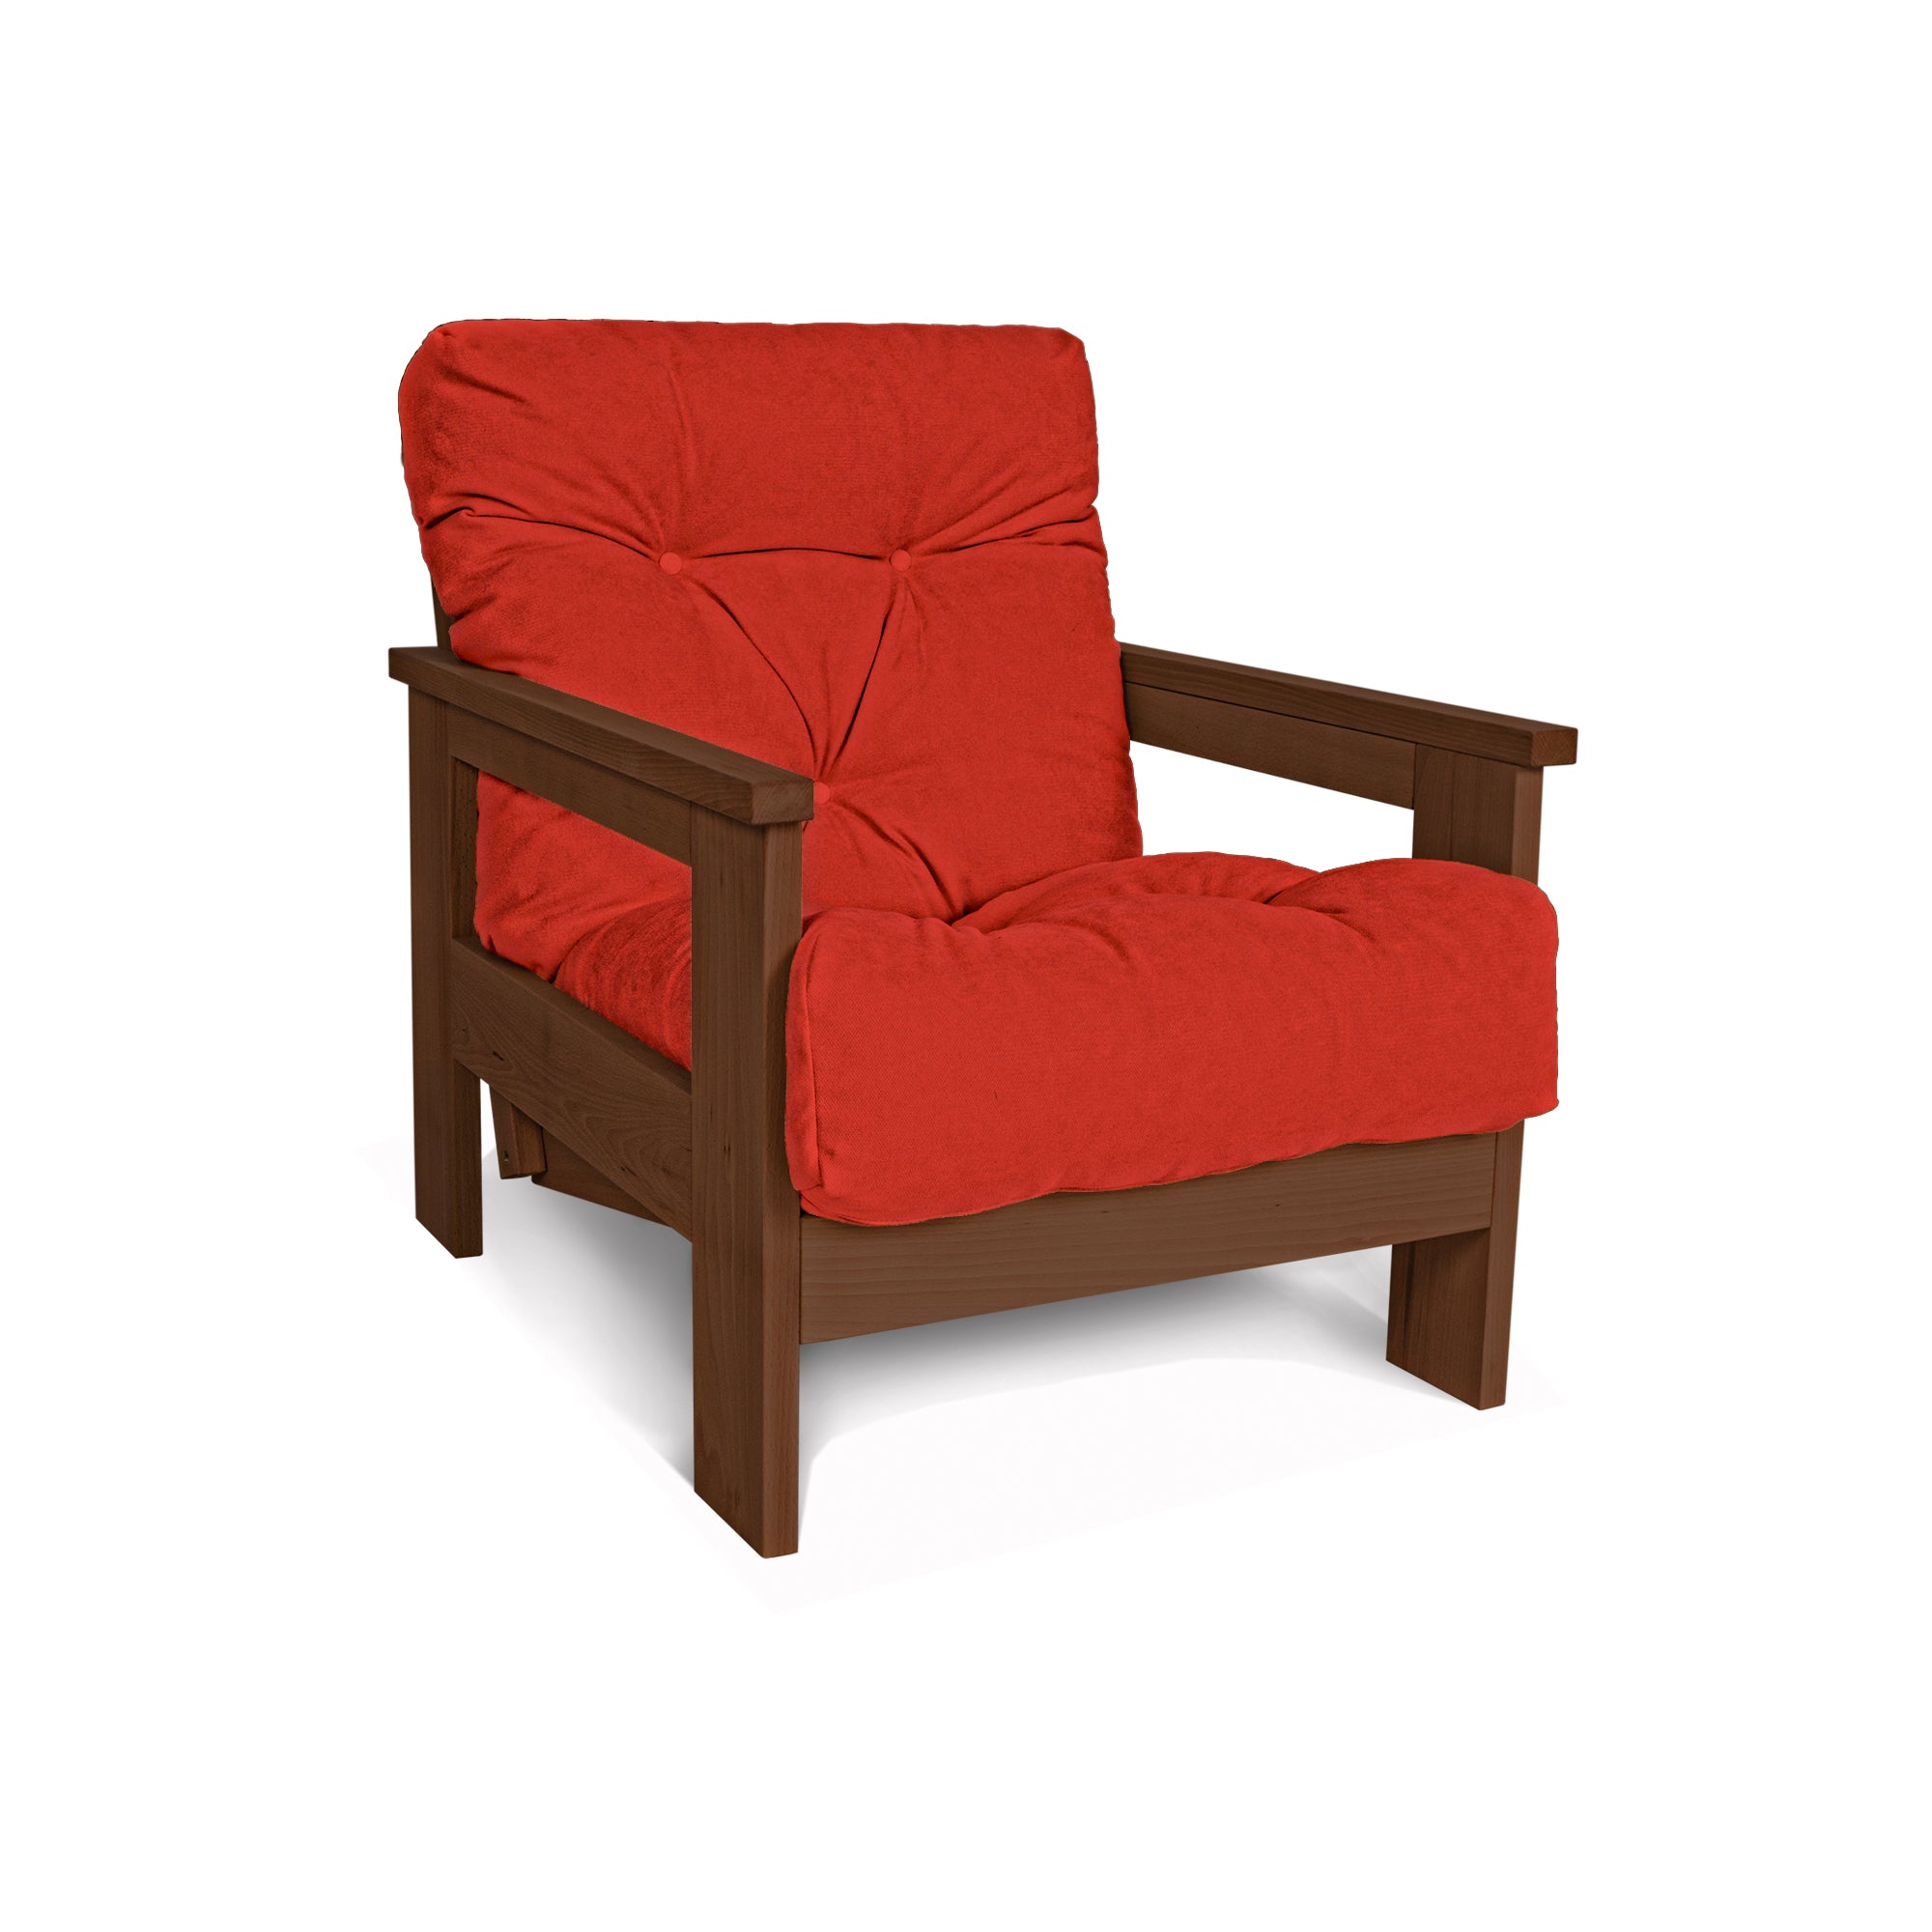 MEXICO Armchair, Beech Wood Frame, Walnut Colour-red fabric